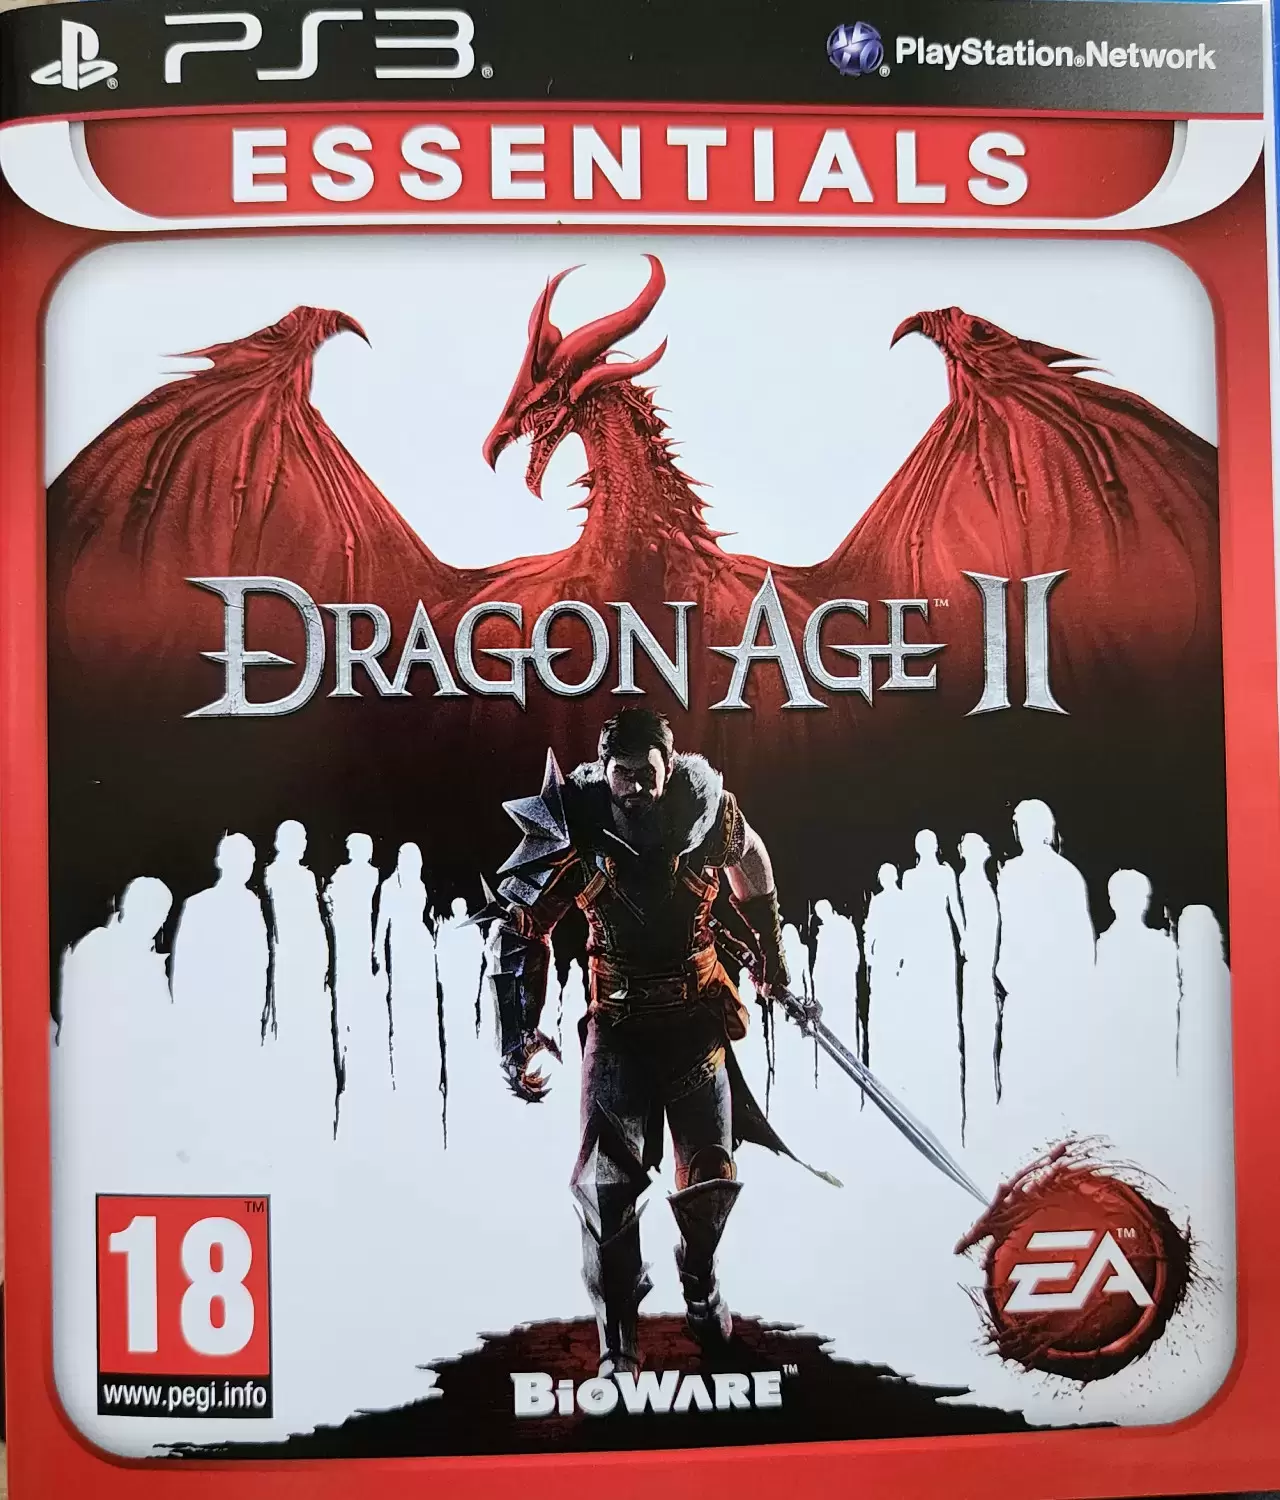 PS3 Games - Dragon Age II - Essentials